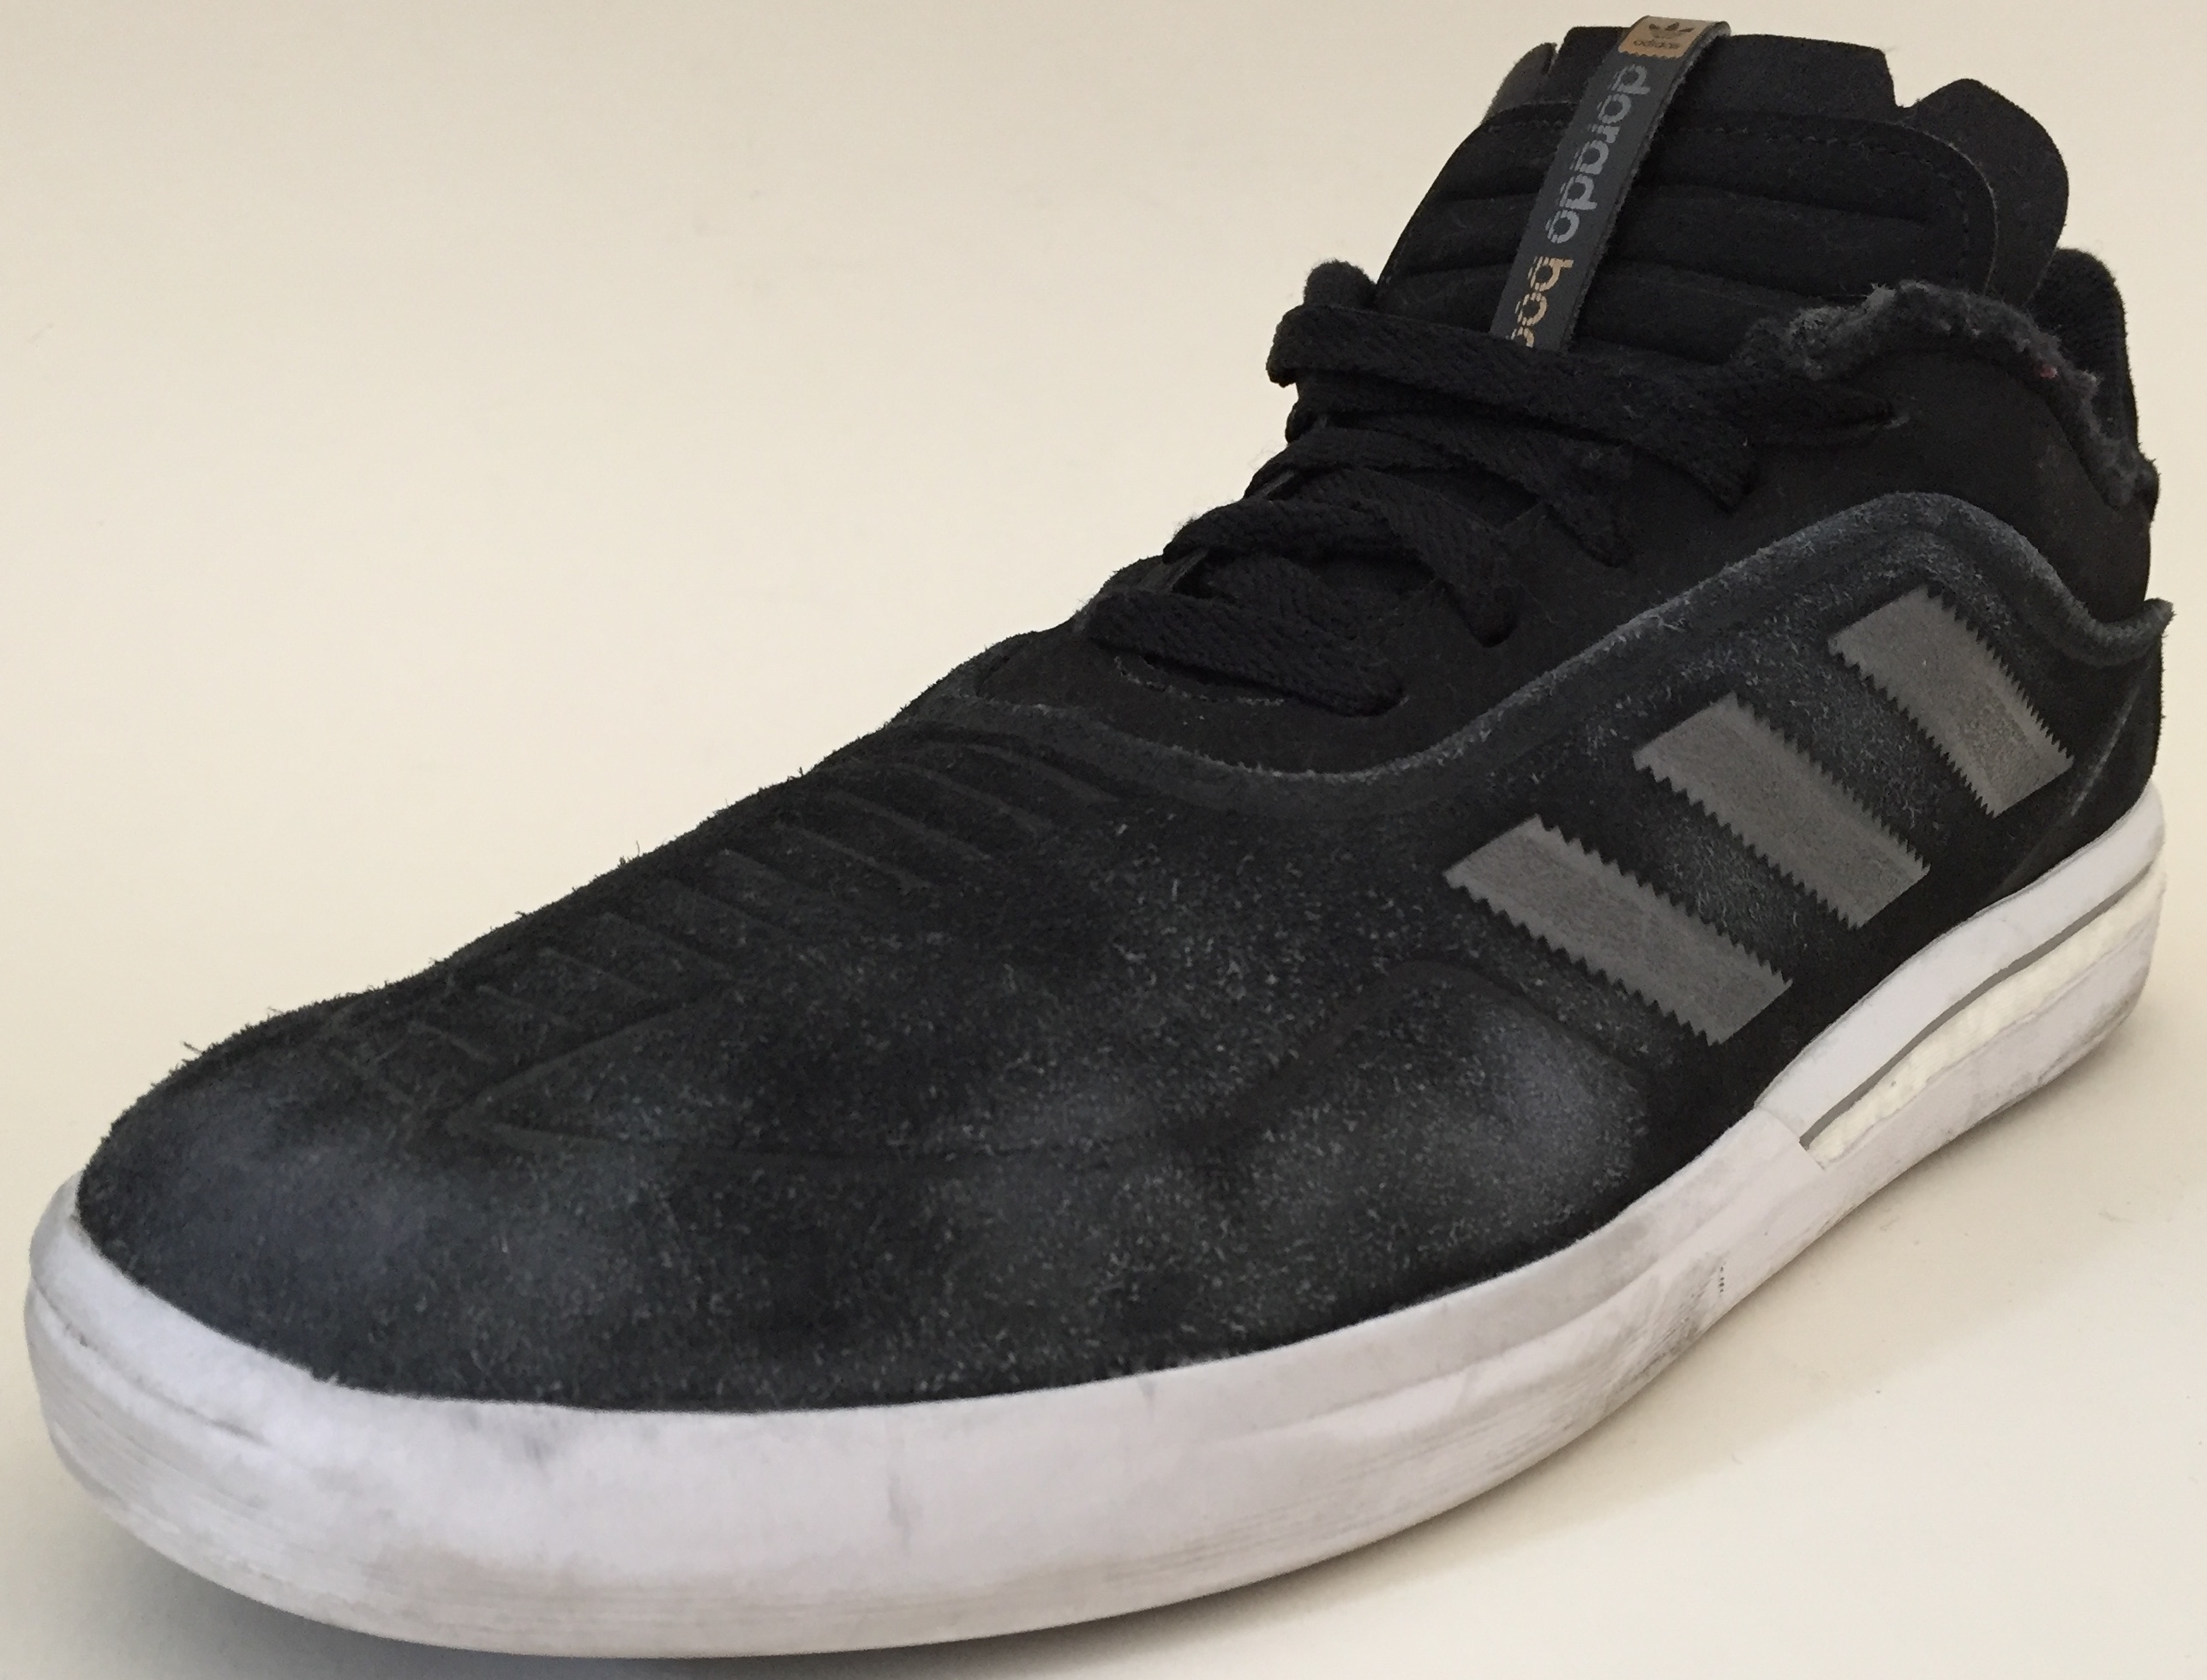 adidas Dorado Boost - Weartested - detailed skate shoe